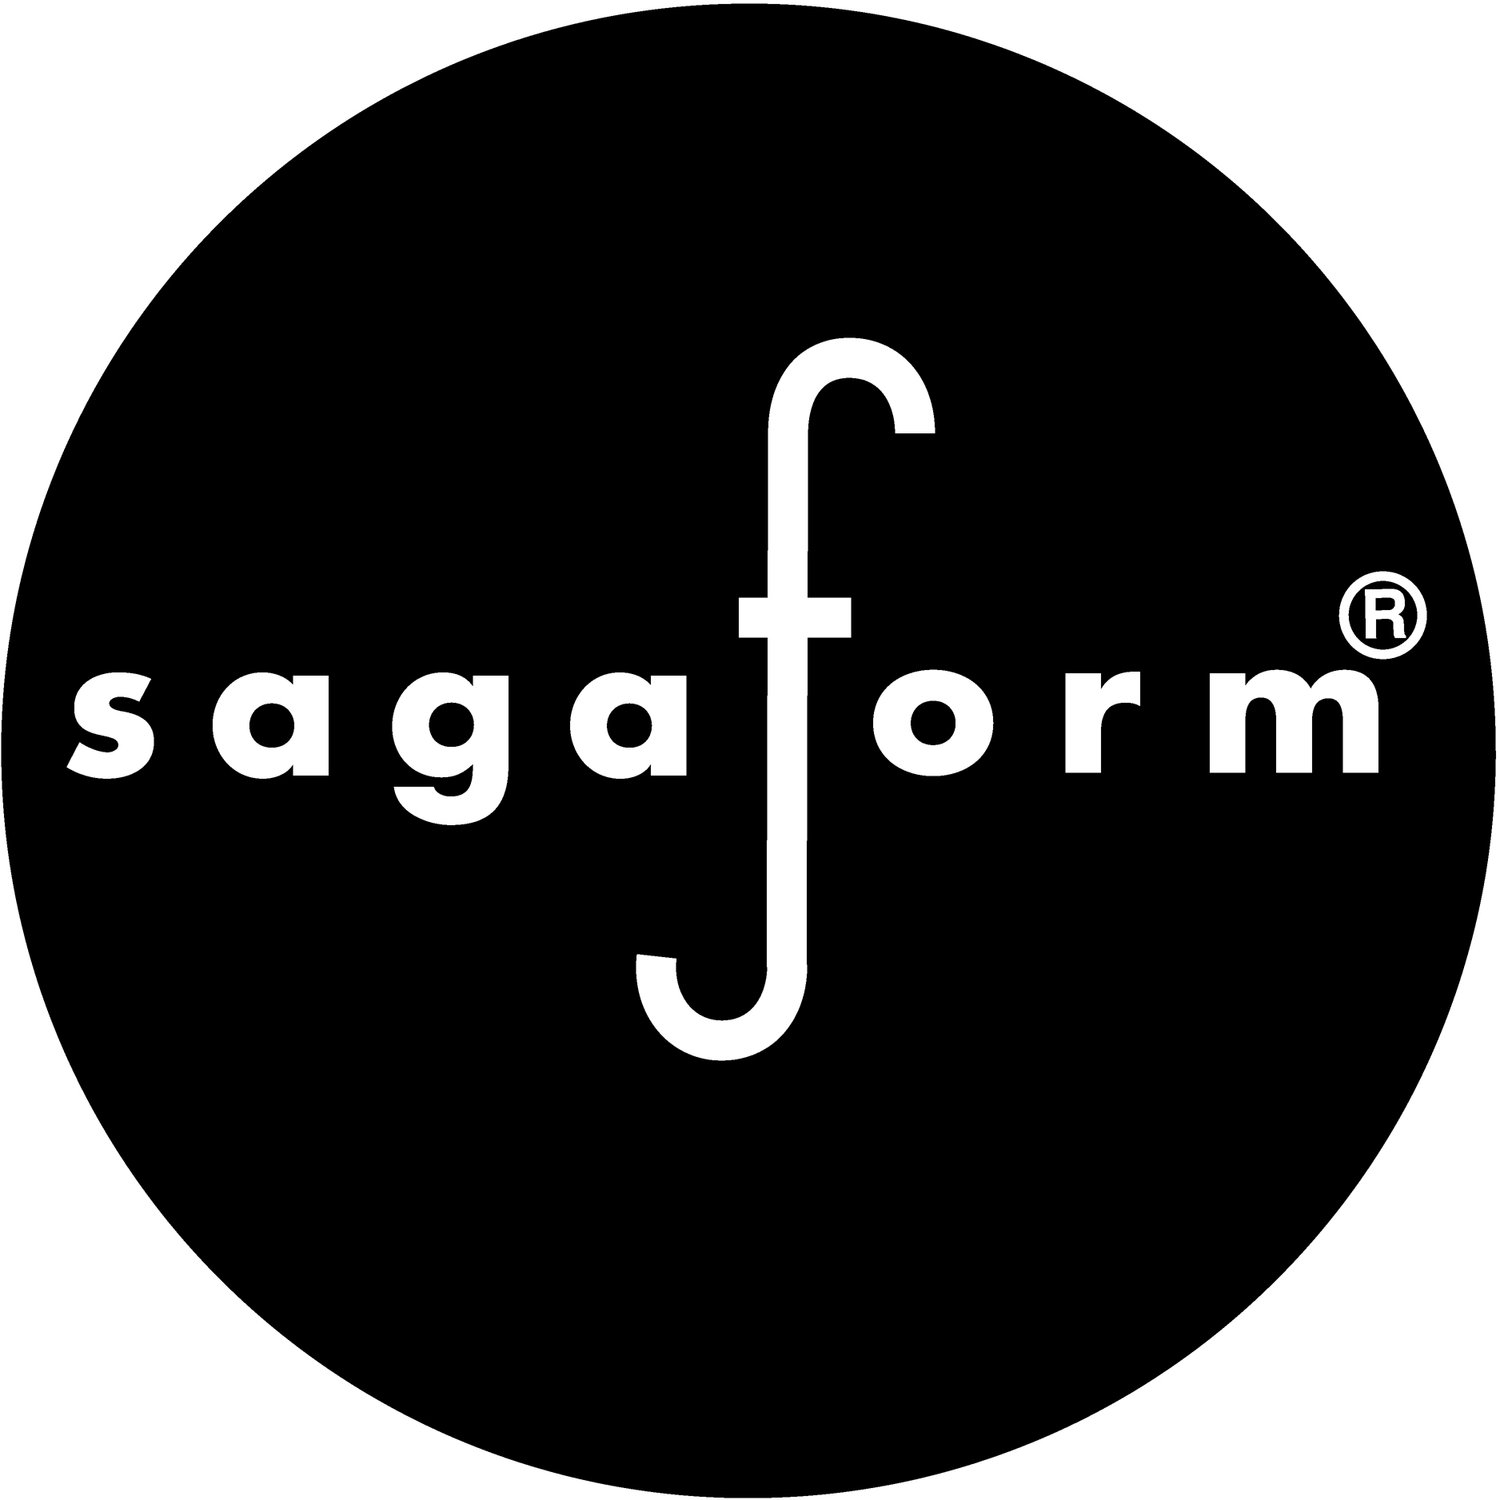 Sagaform, Utensili da cucina Svedesi